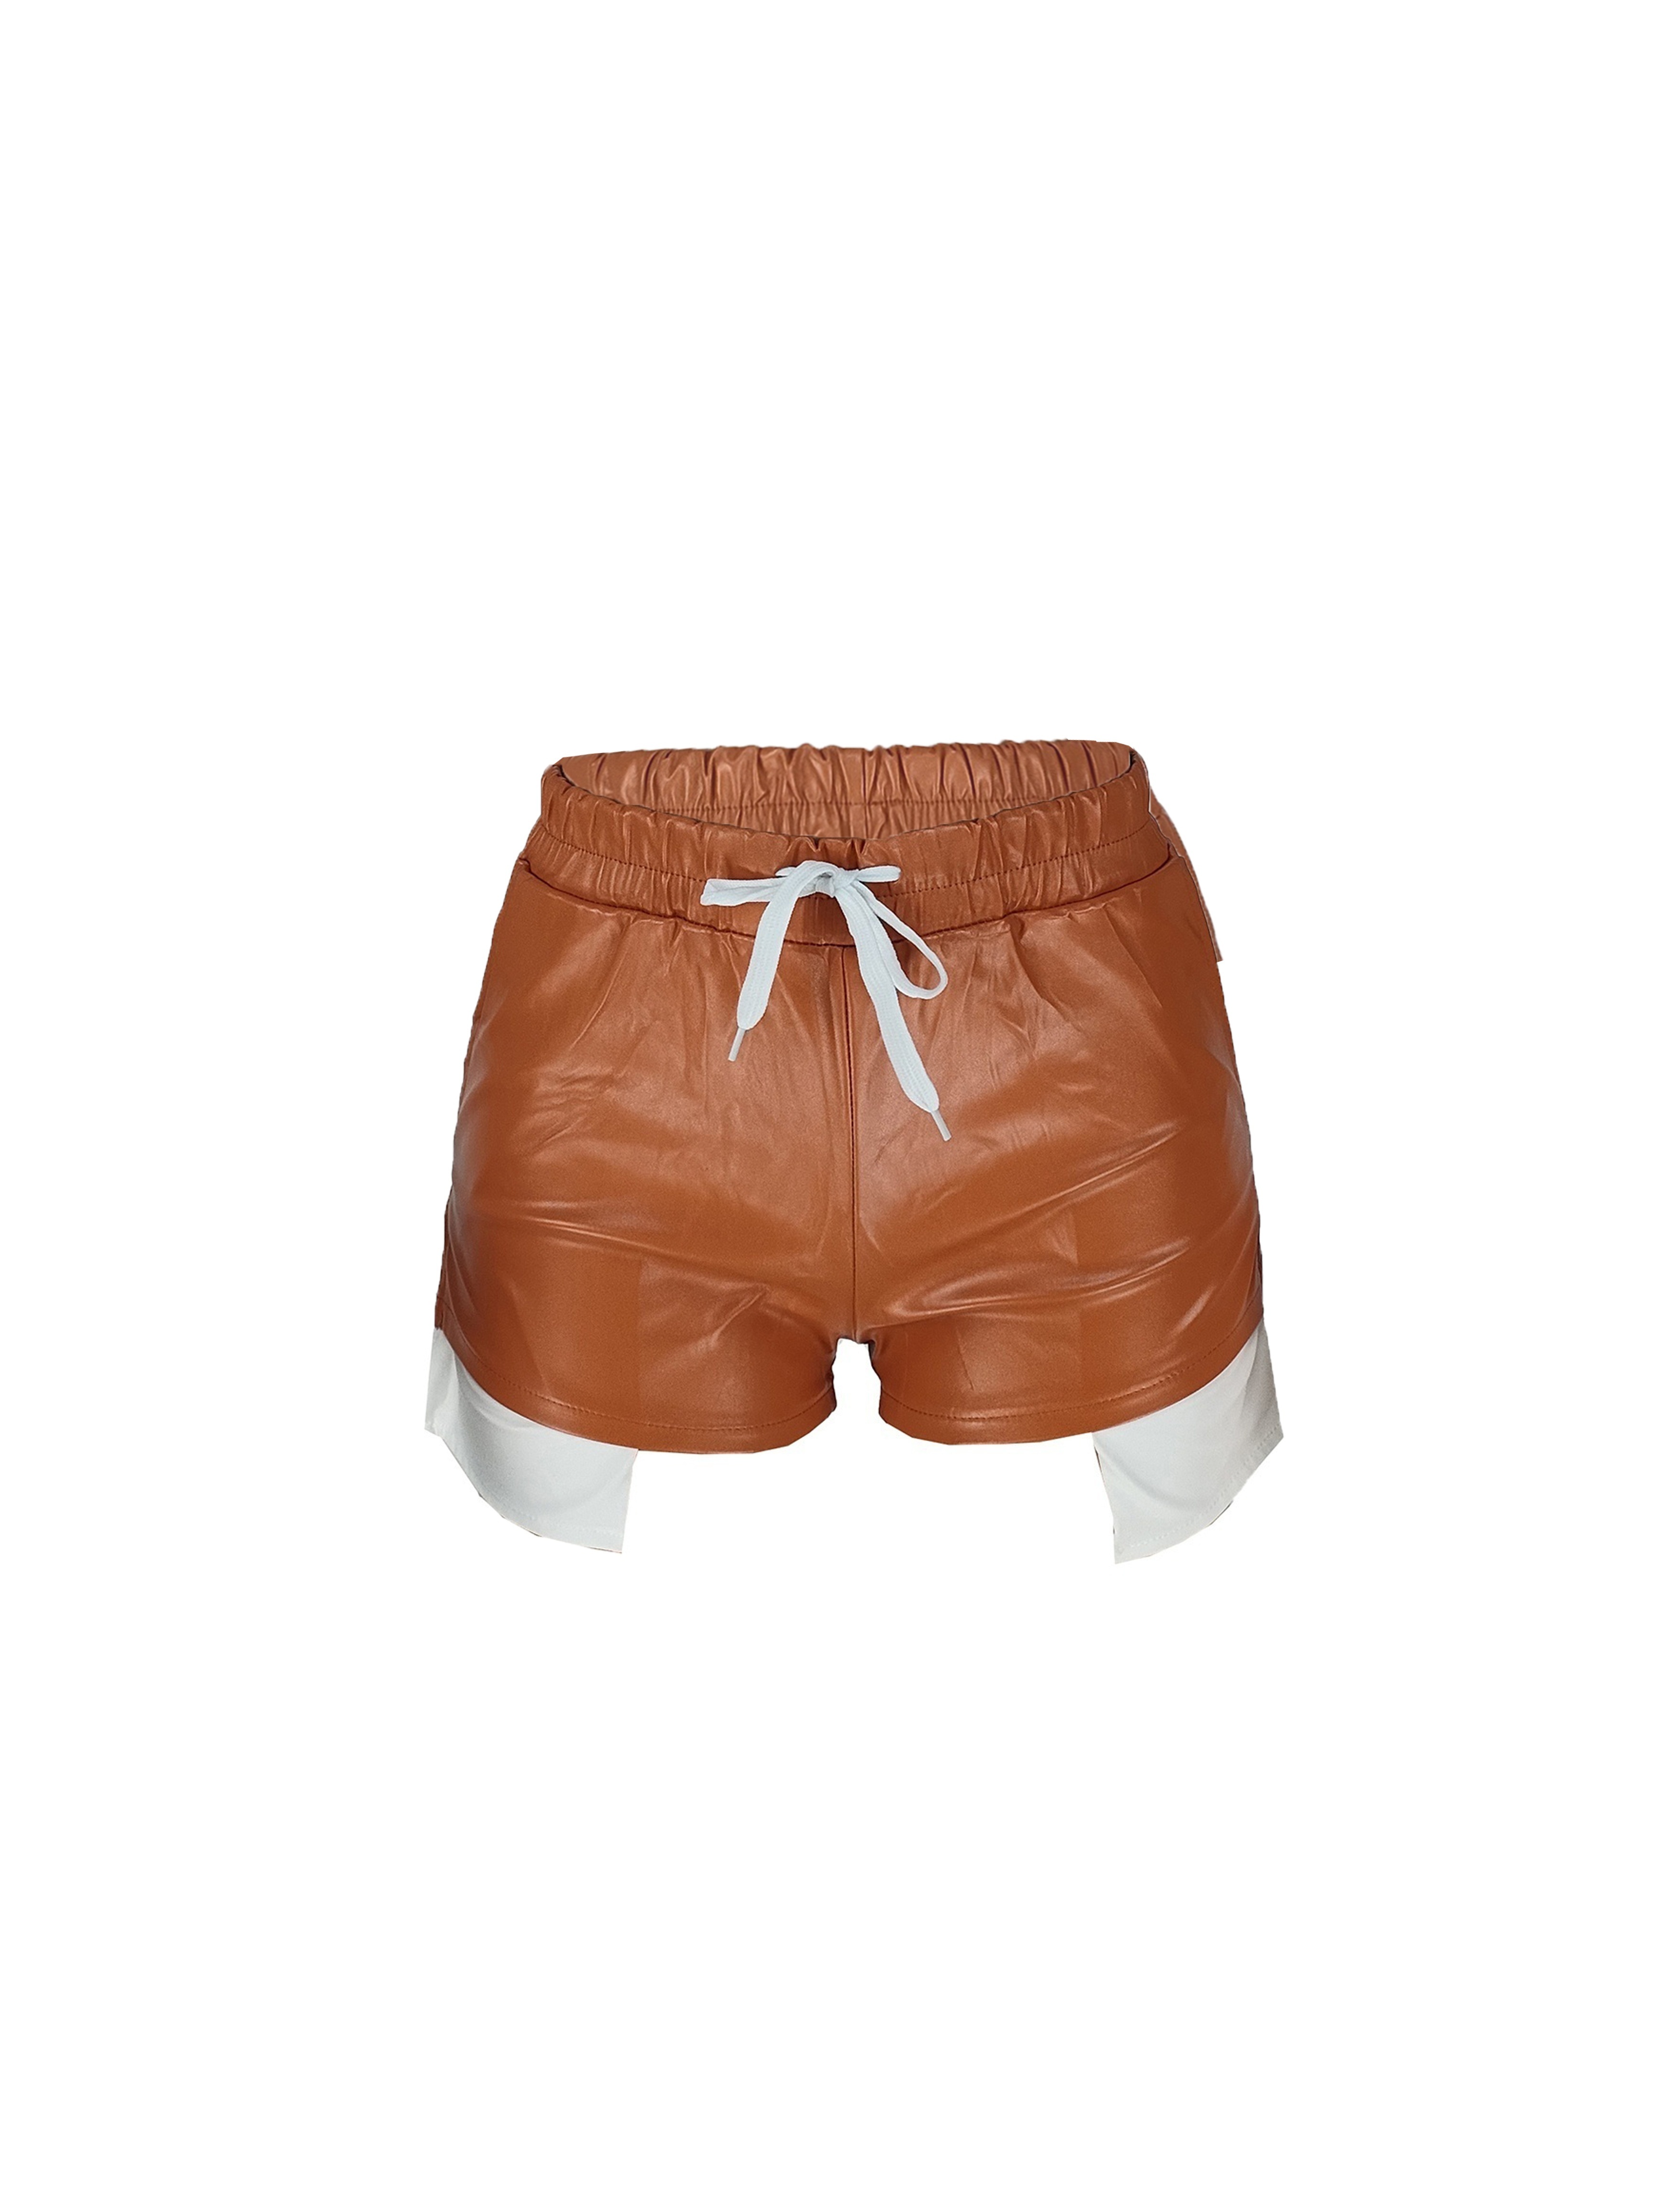 Faux Leather Split Shorts Casual Drawstring Waist Hot Shorts